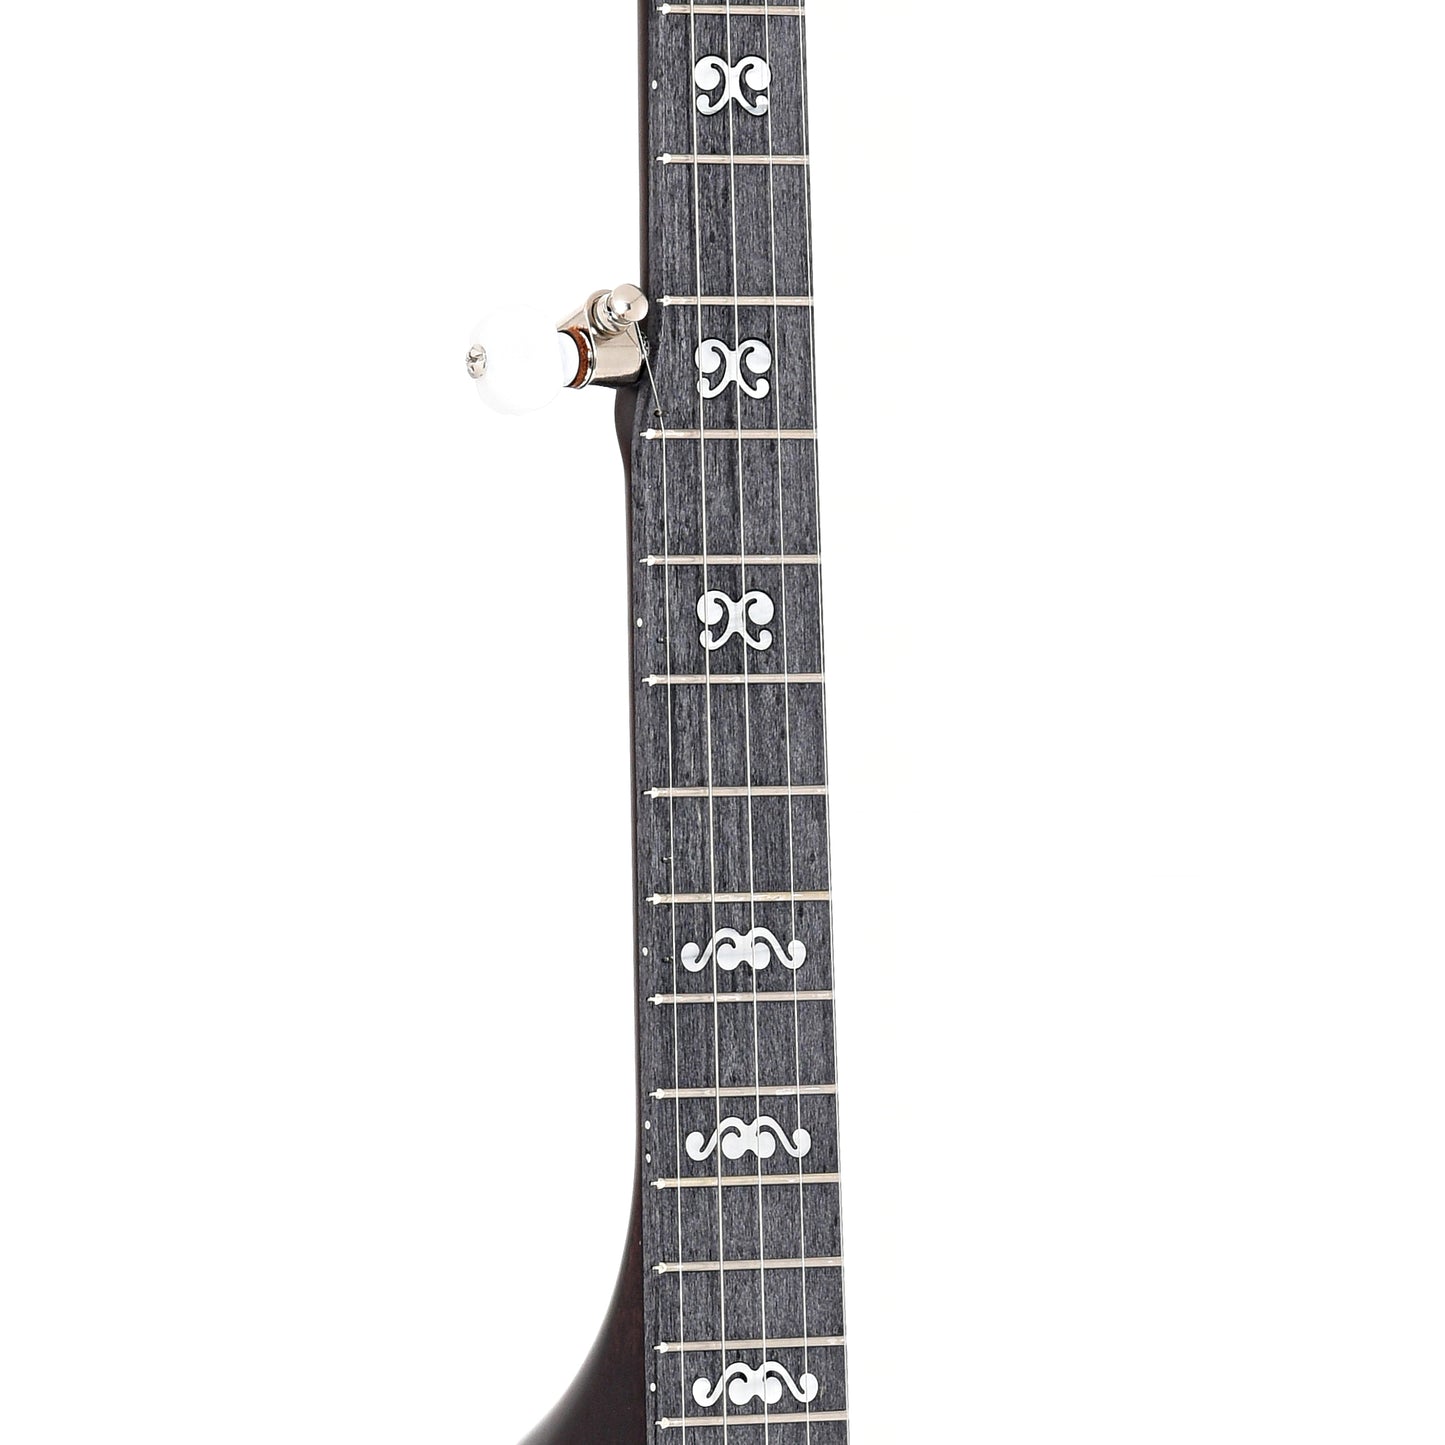 Image 6 of Deering Artisan Goodtime Junior Banjo- SKU# AGOODJR : Product Type Other : Elderly Instruments